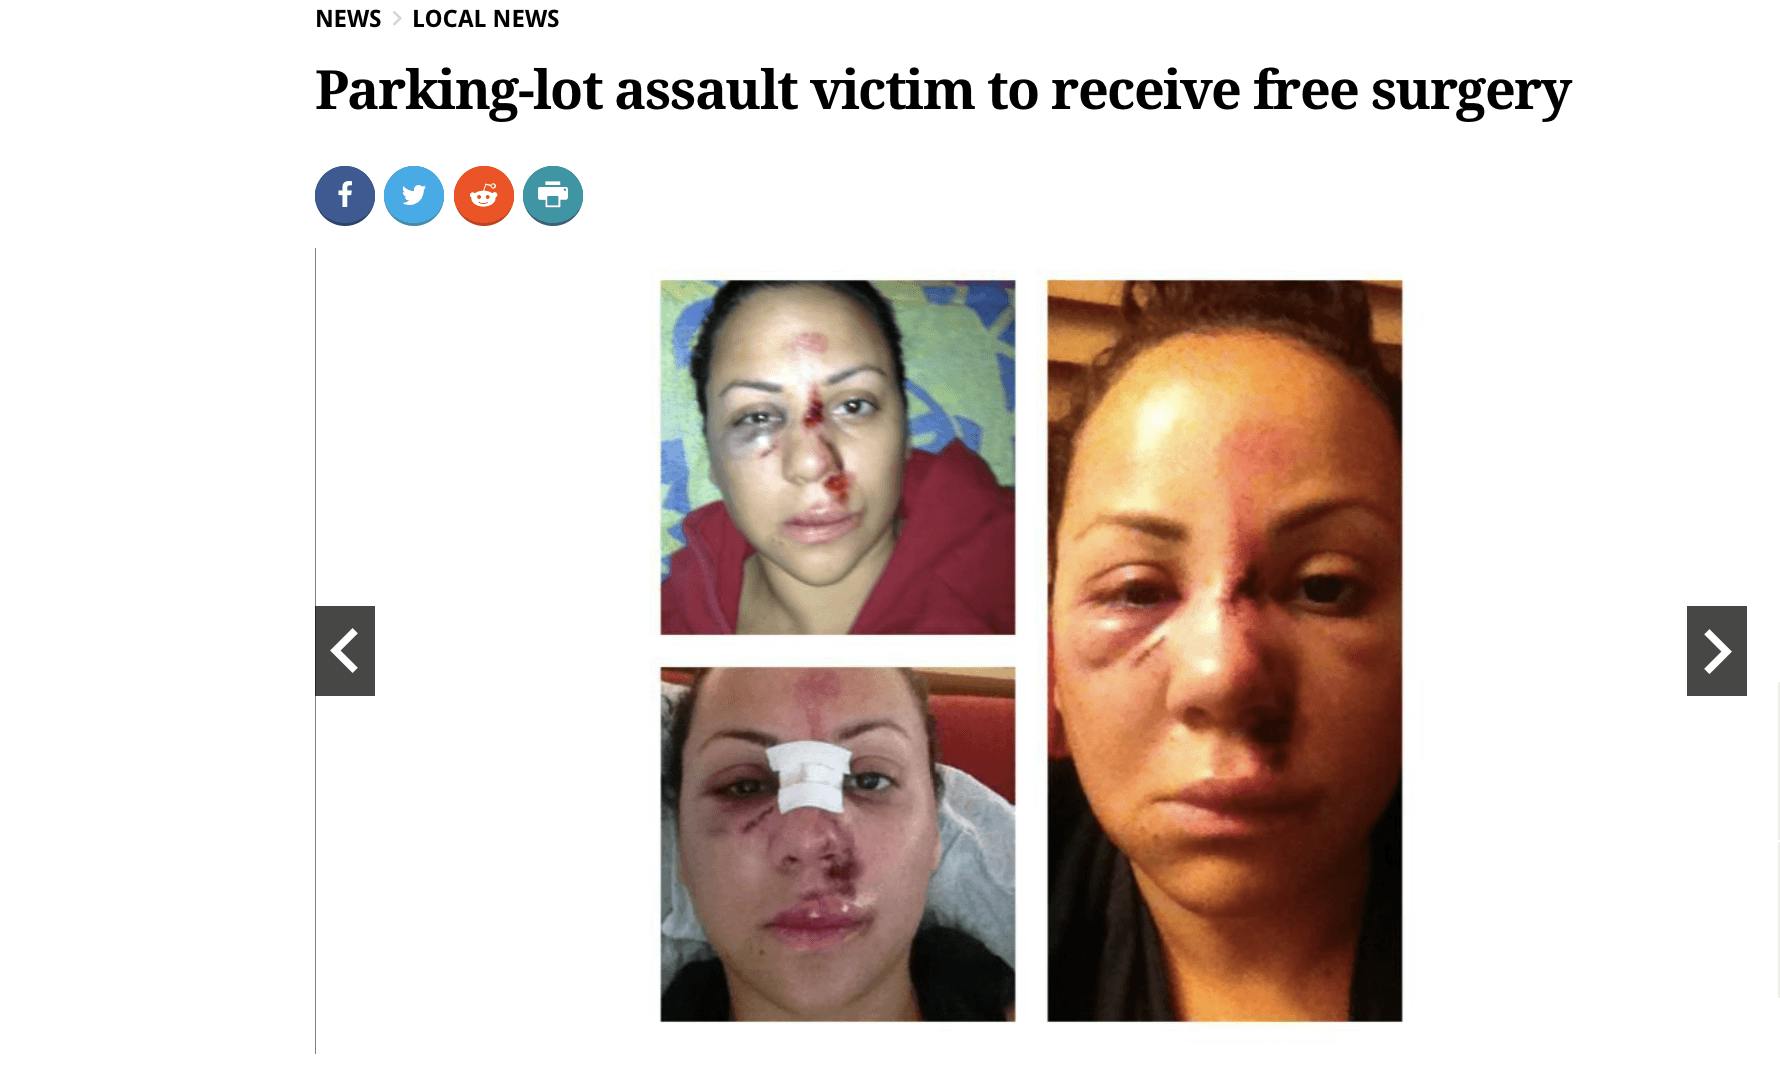 CosmetiCare Docs Donate Surgery to Parking Lot Assault Victim